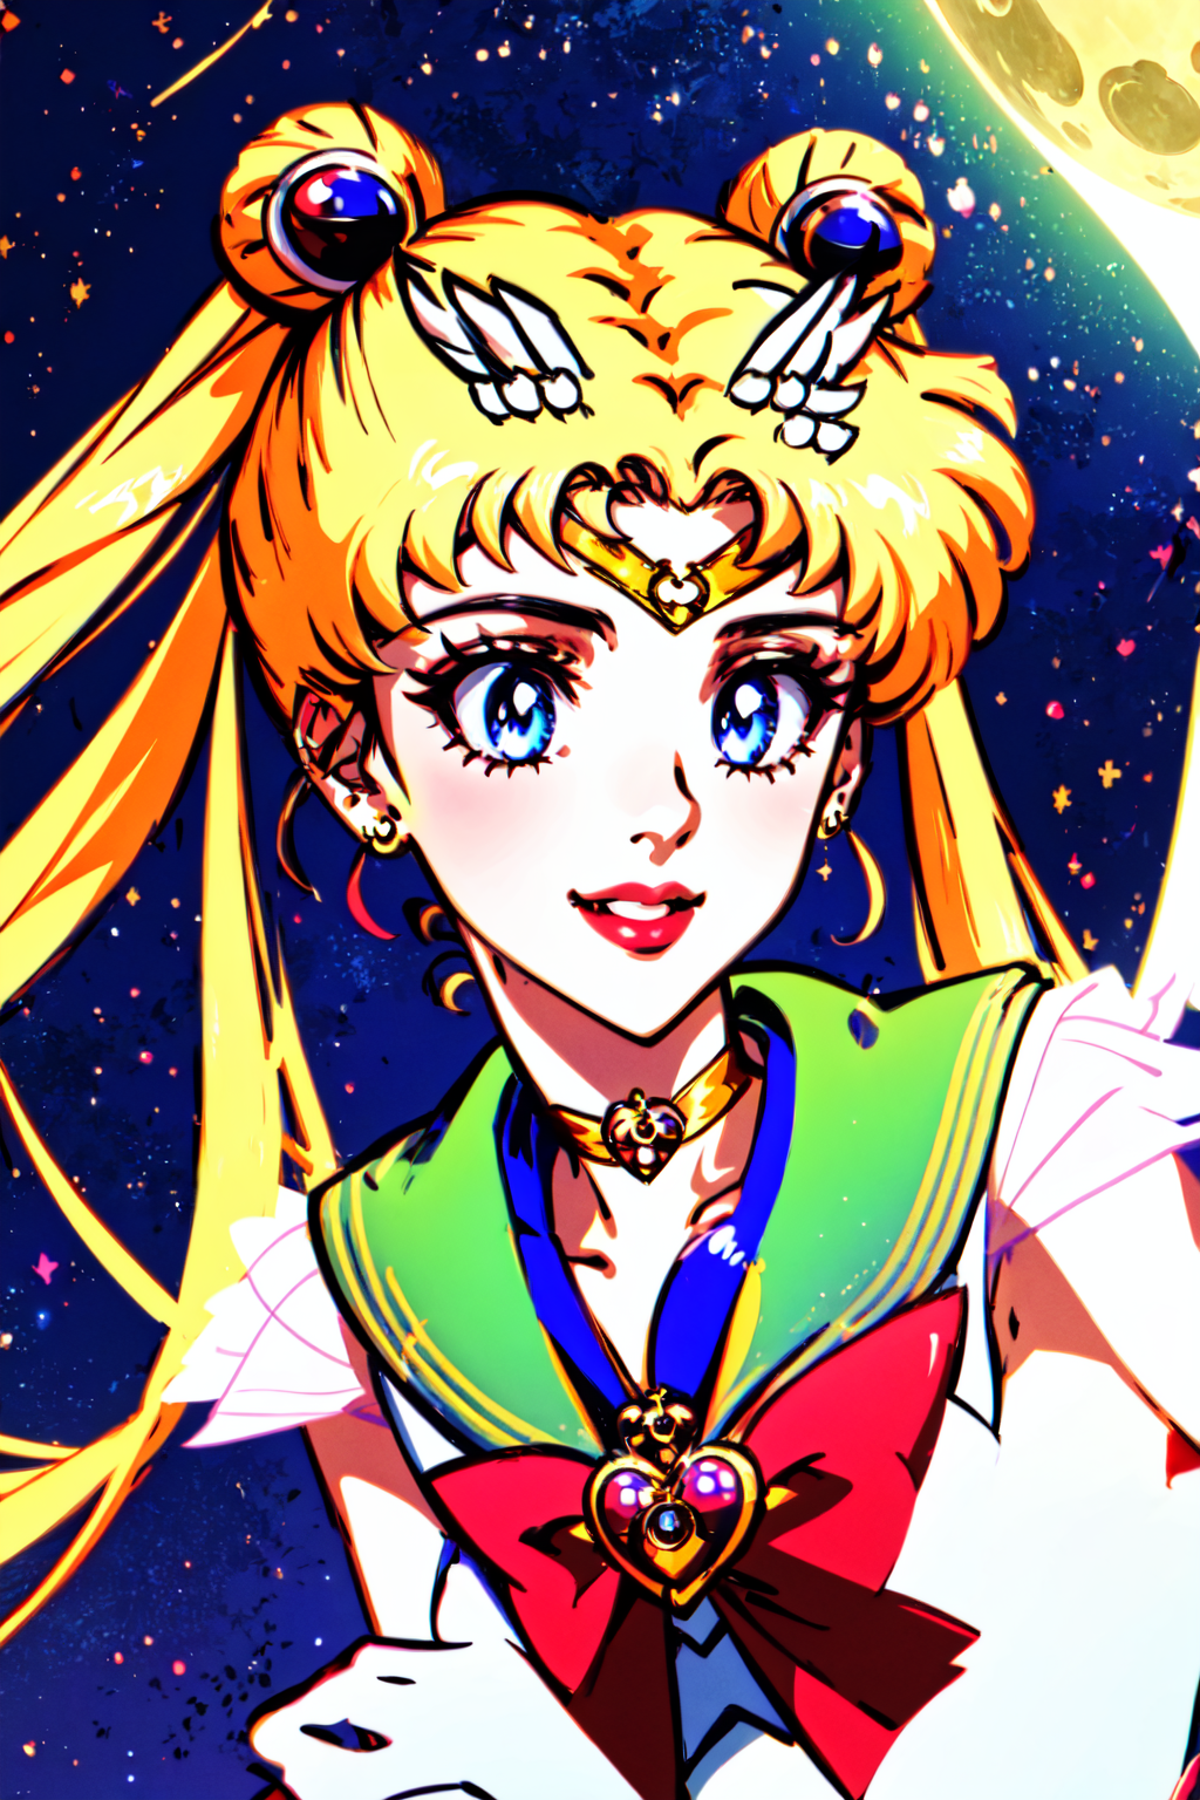 Super Sailor Moon LoRa image by duskfallcrew